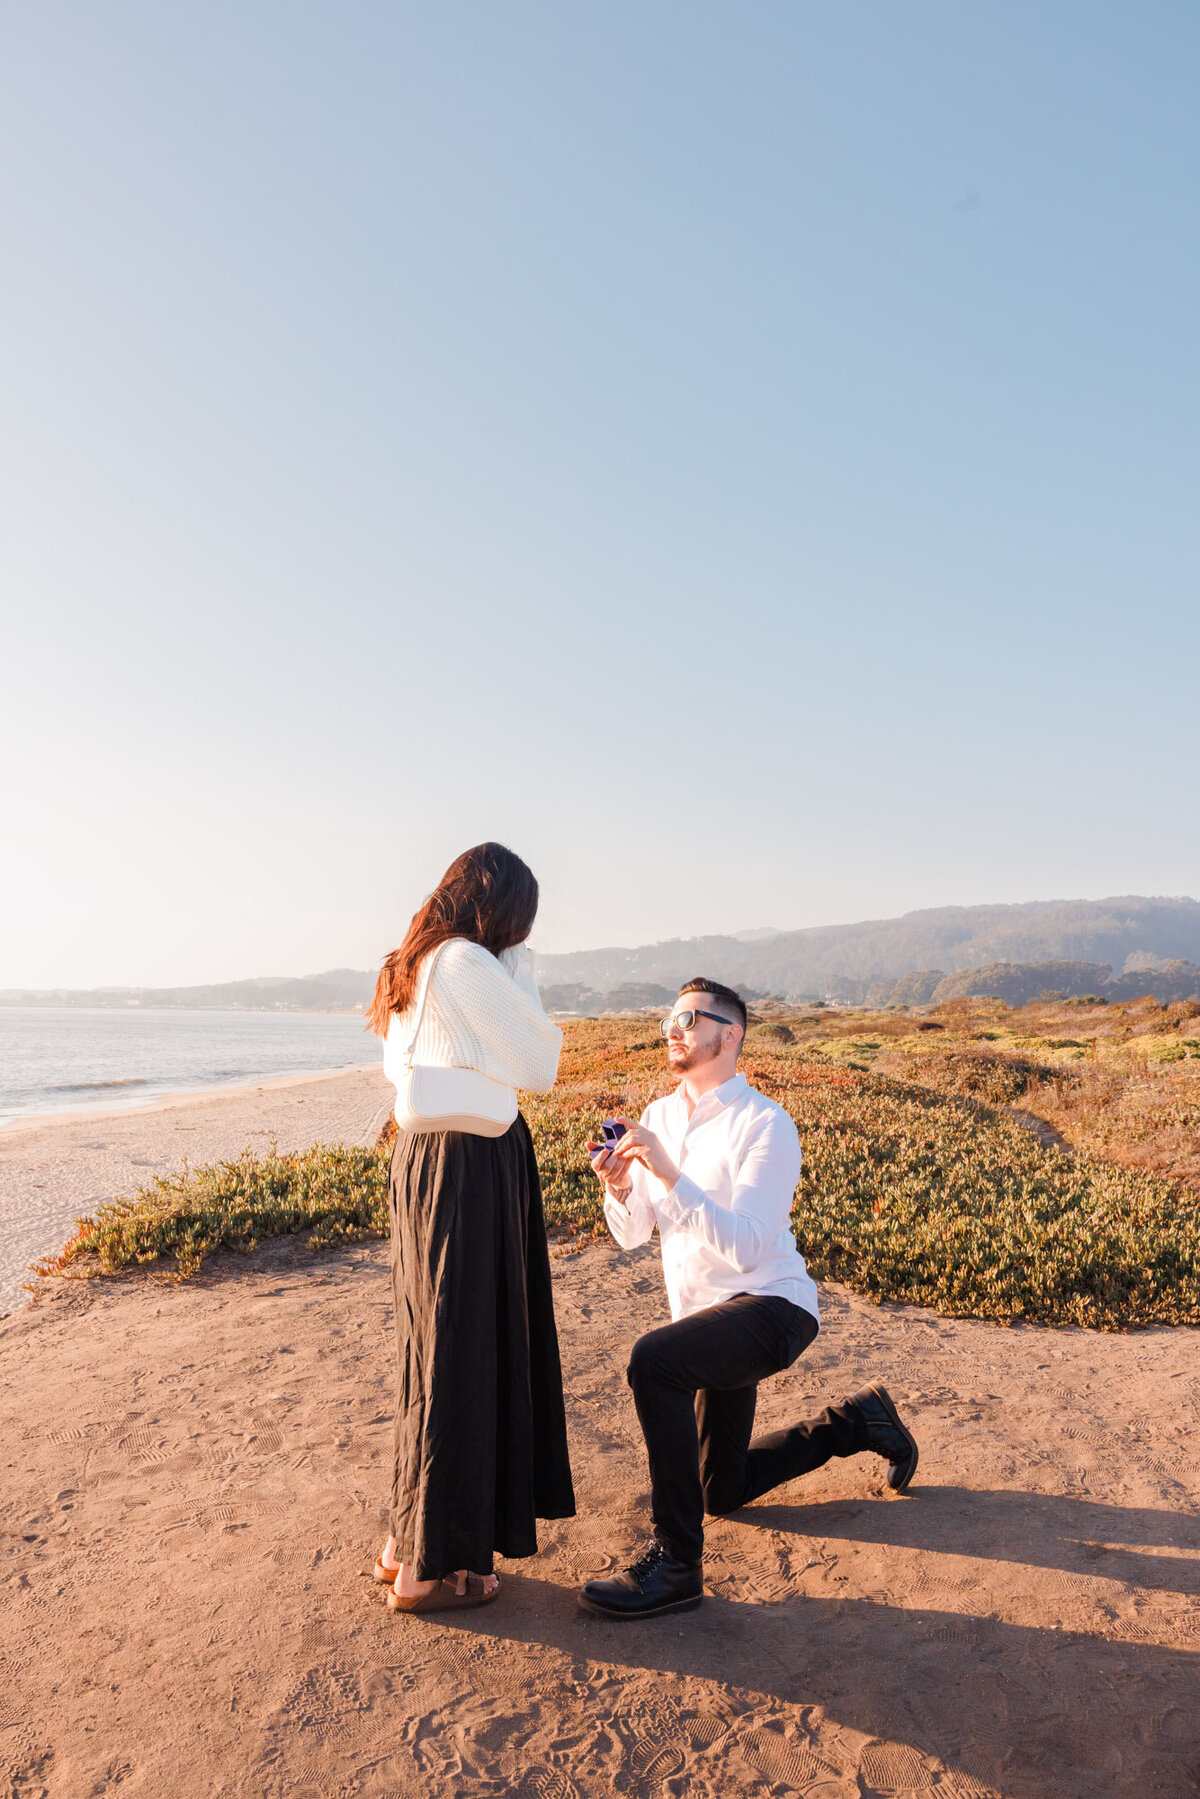 Kyle Woolum + Stephanie-Proposal Engagement-Half Moon Bay-Dunes Beach-San Francisco Wedding Photographer-San Francisco Photographer-Half Moon Bay Photographer-Emily Pillon Photography-S-092323-4